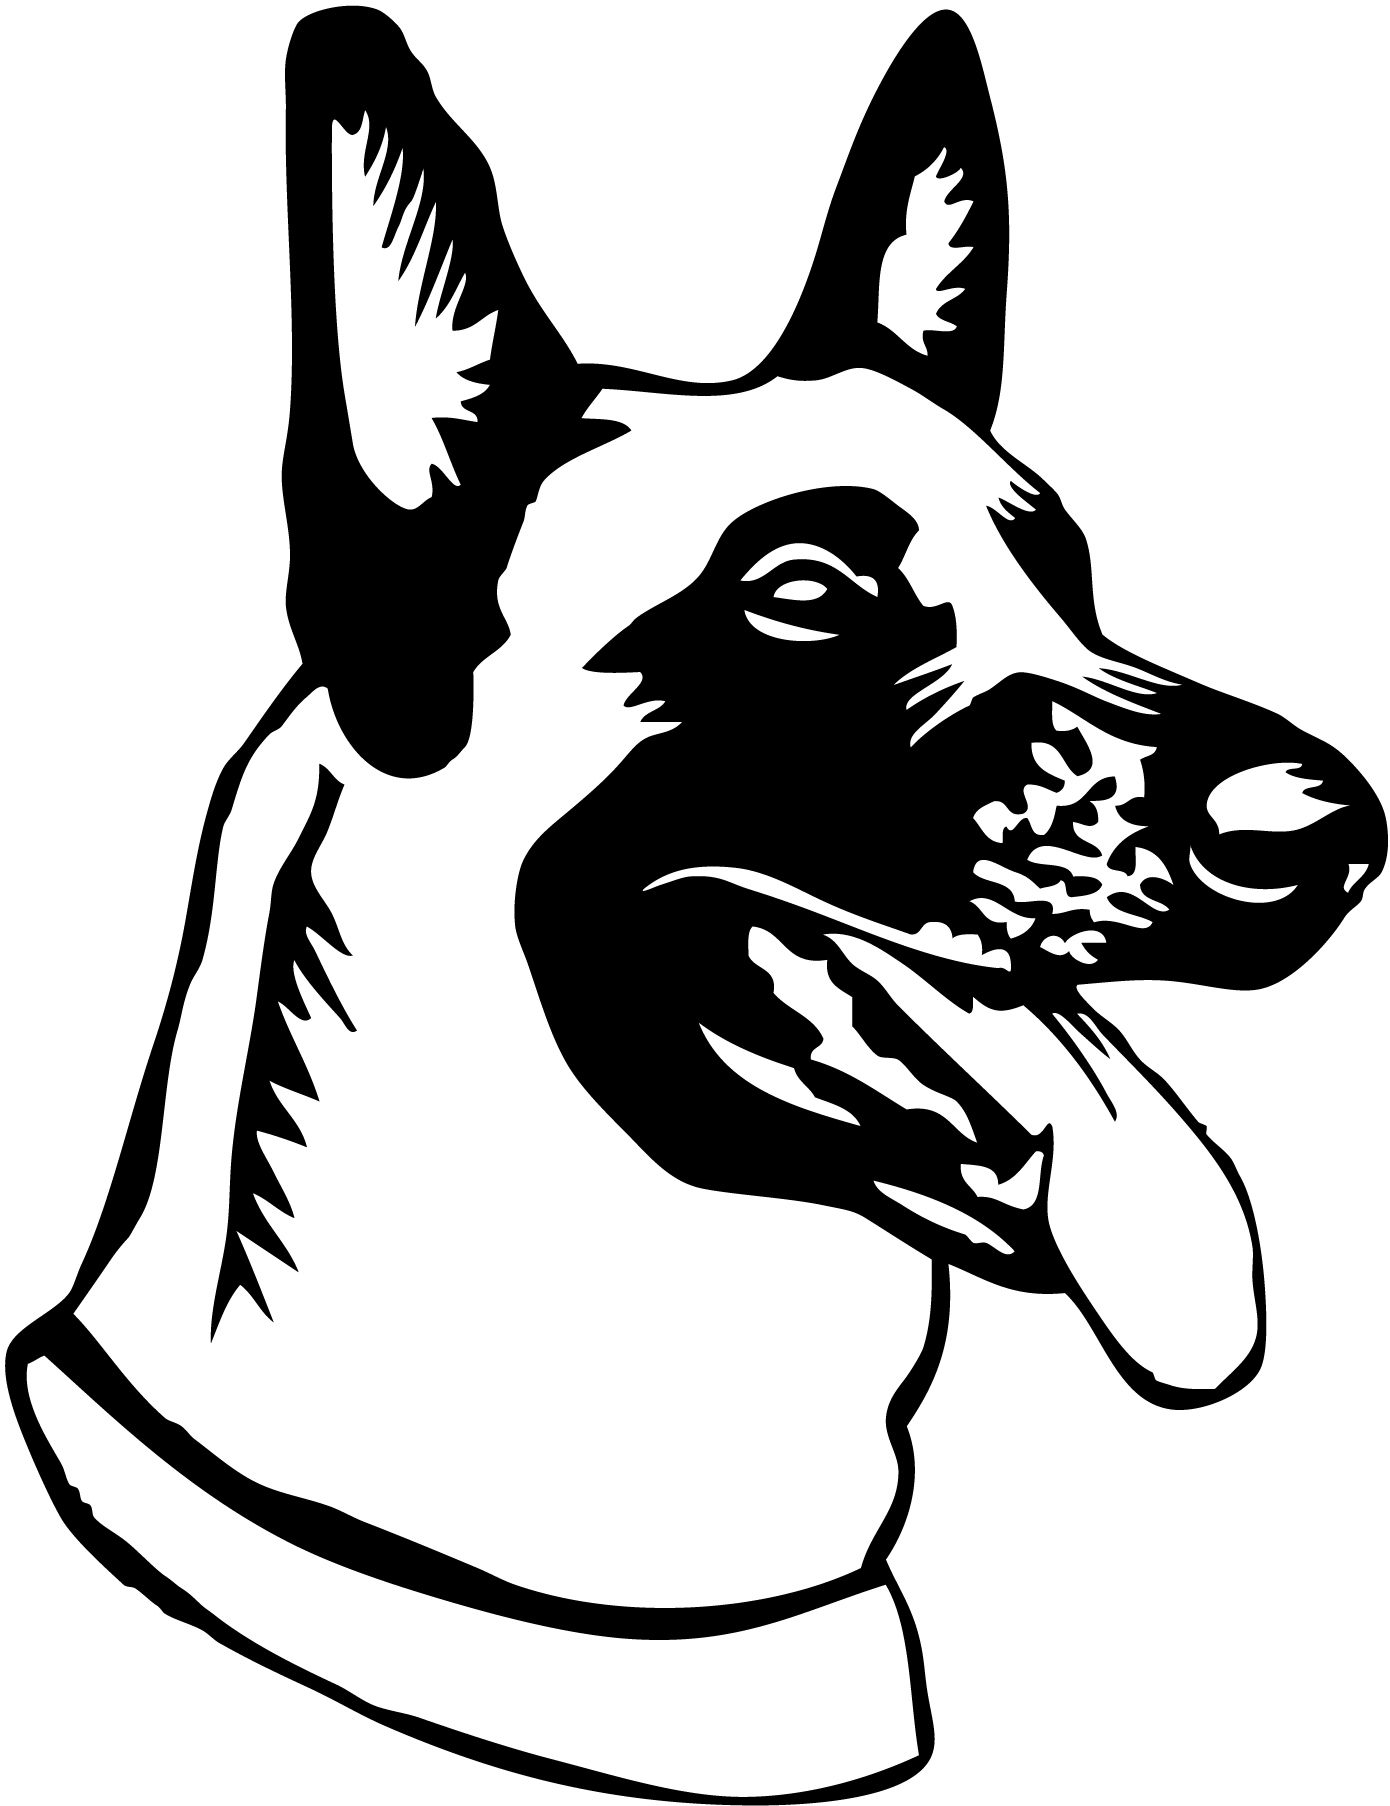 Stickers autocollant chien Malinois 03